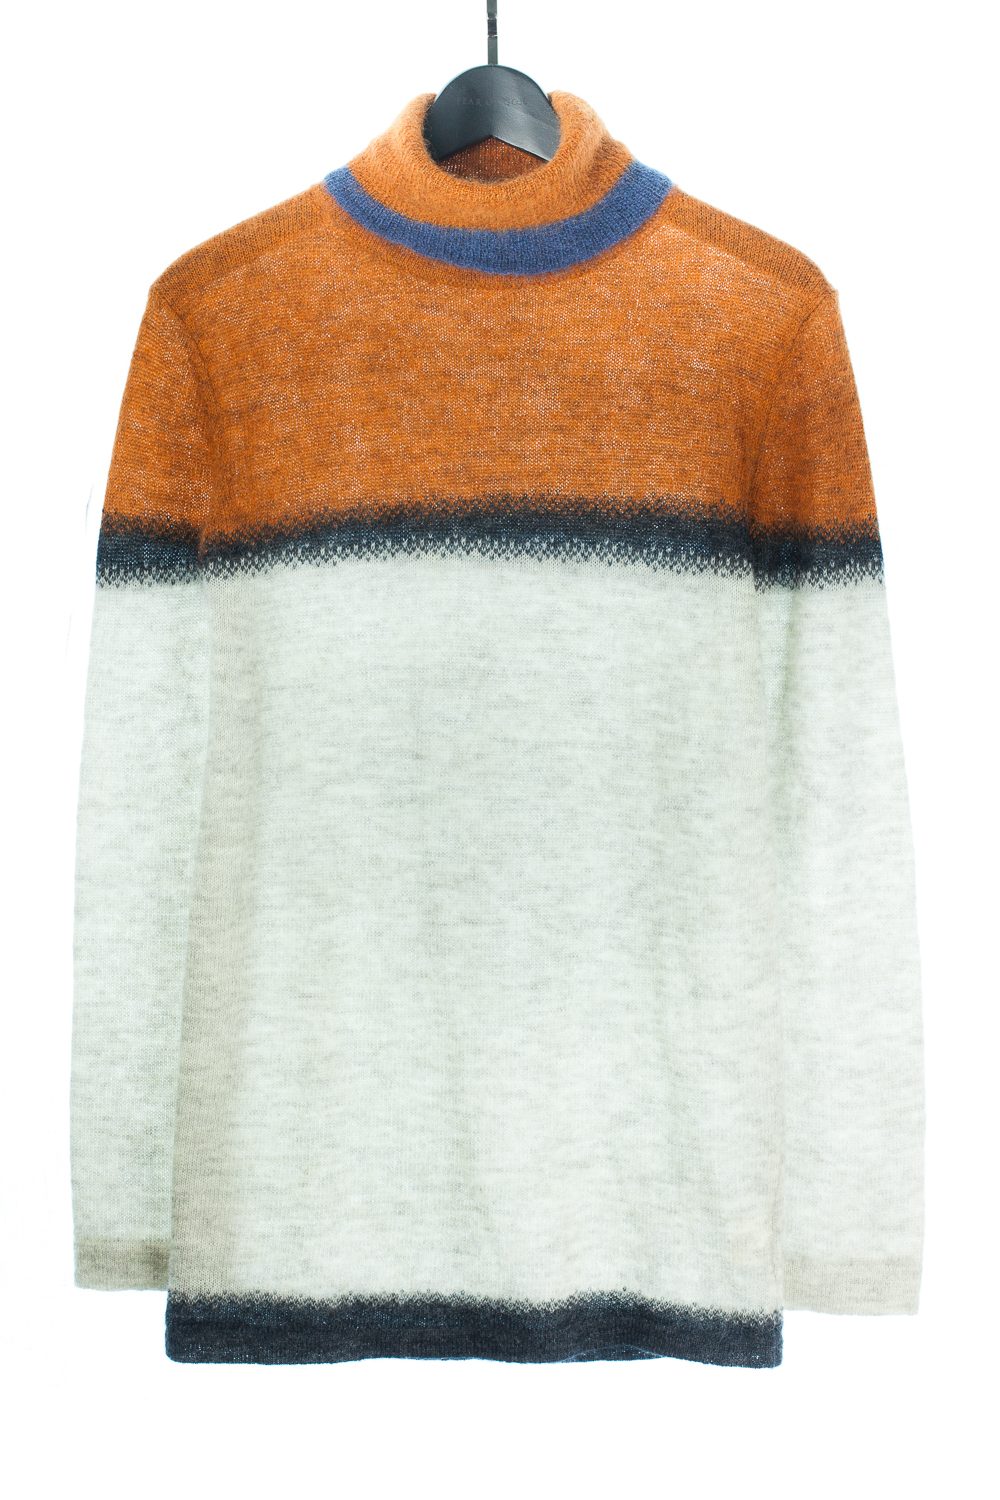 FW08 Rothko Stripe Sweater